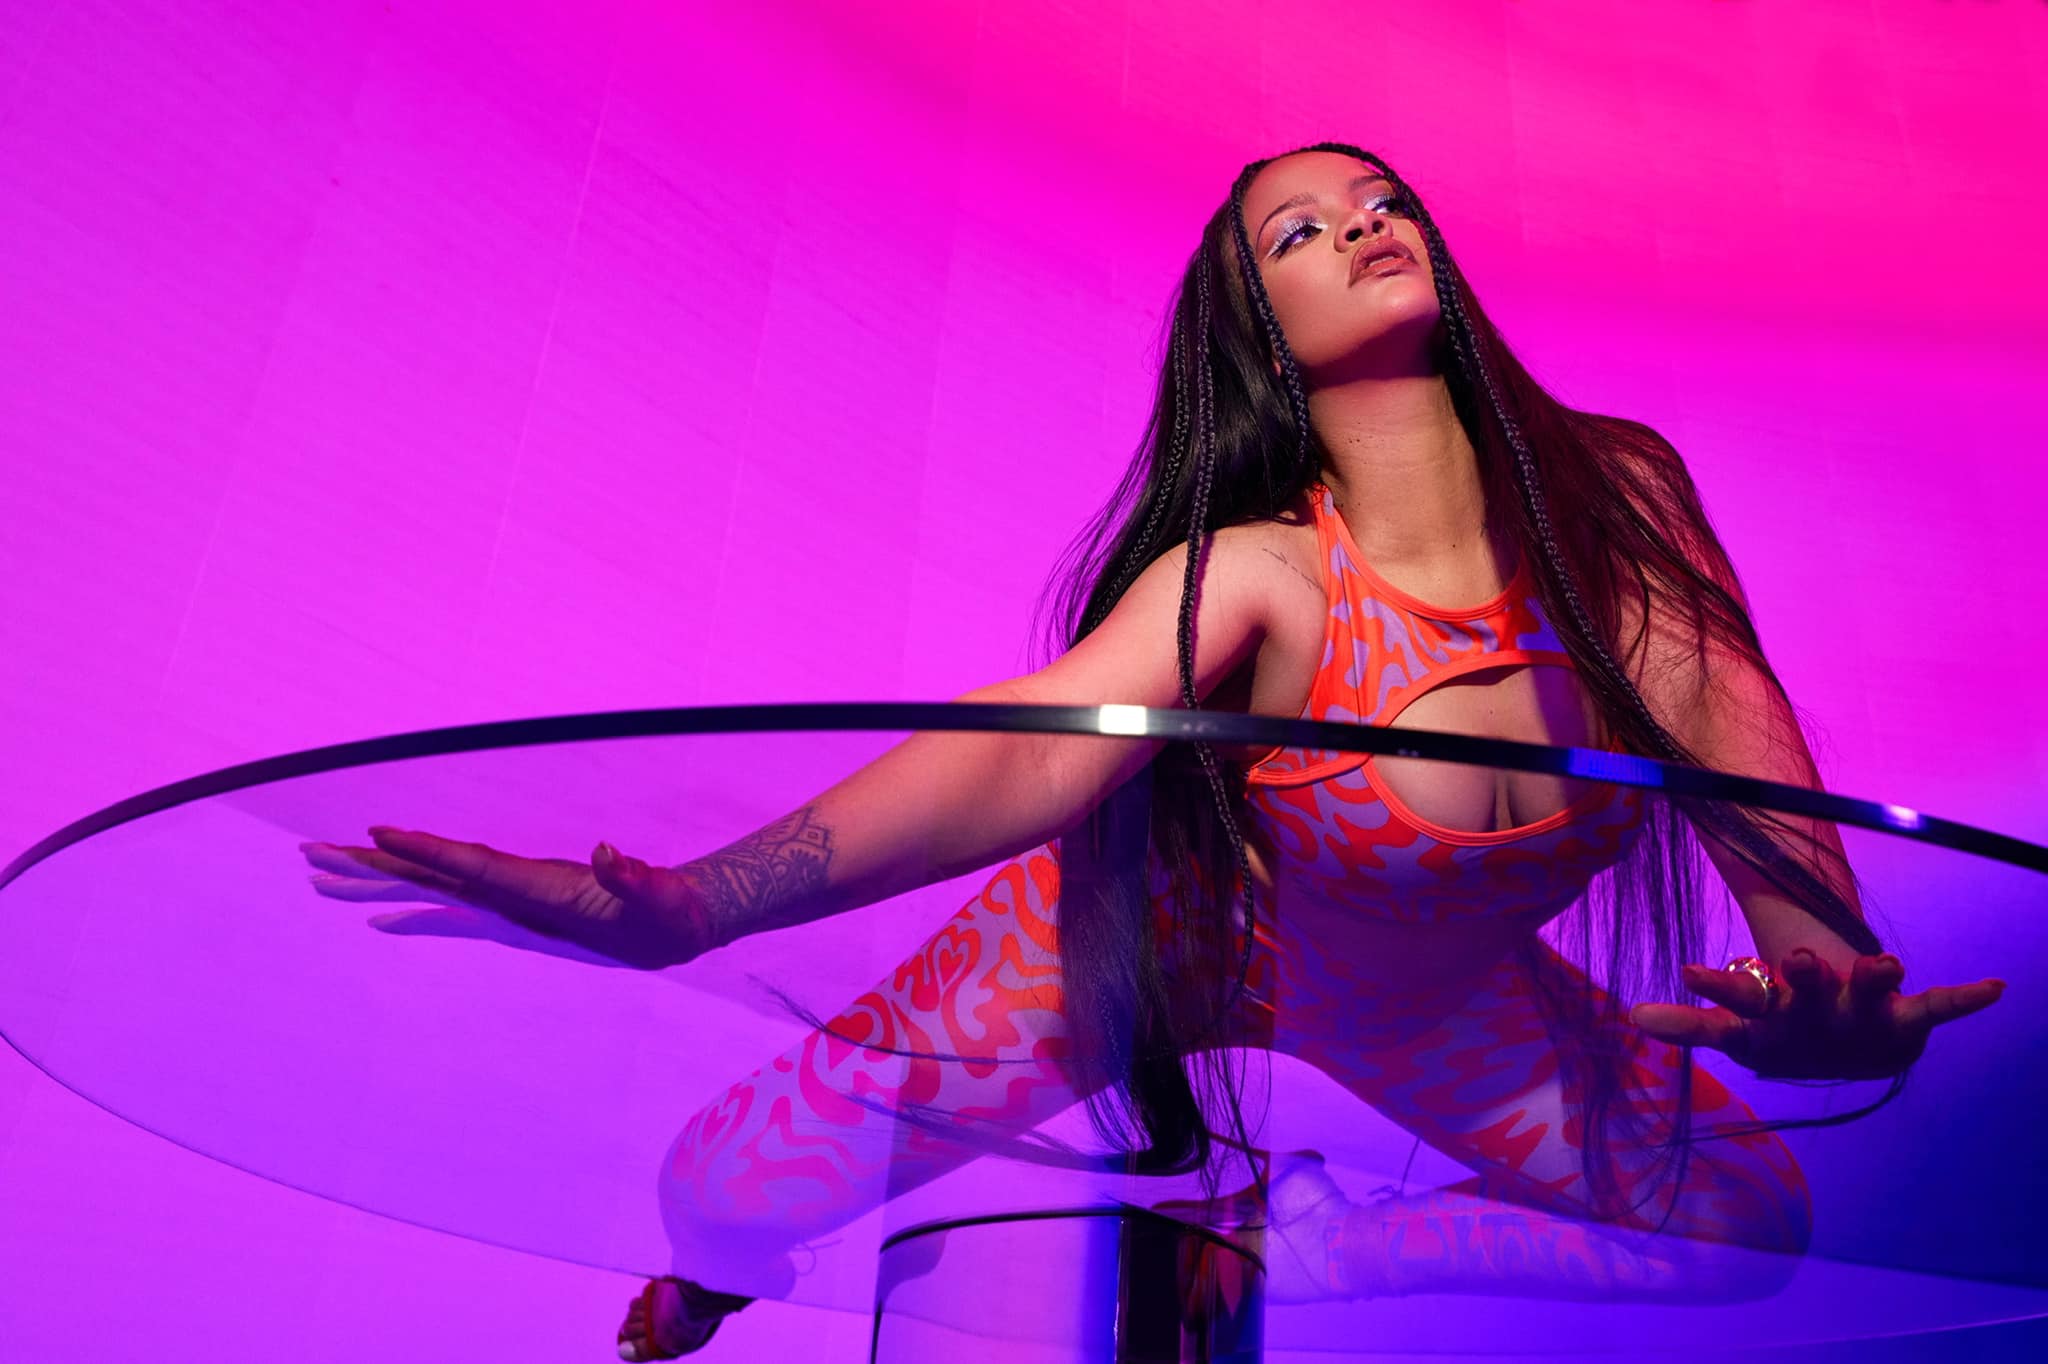 Celebrity singer Rihanna models Savage X Fenty, fans love the Valentine’s Day collection